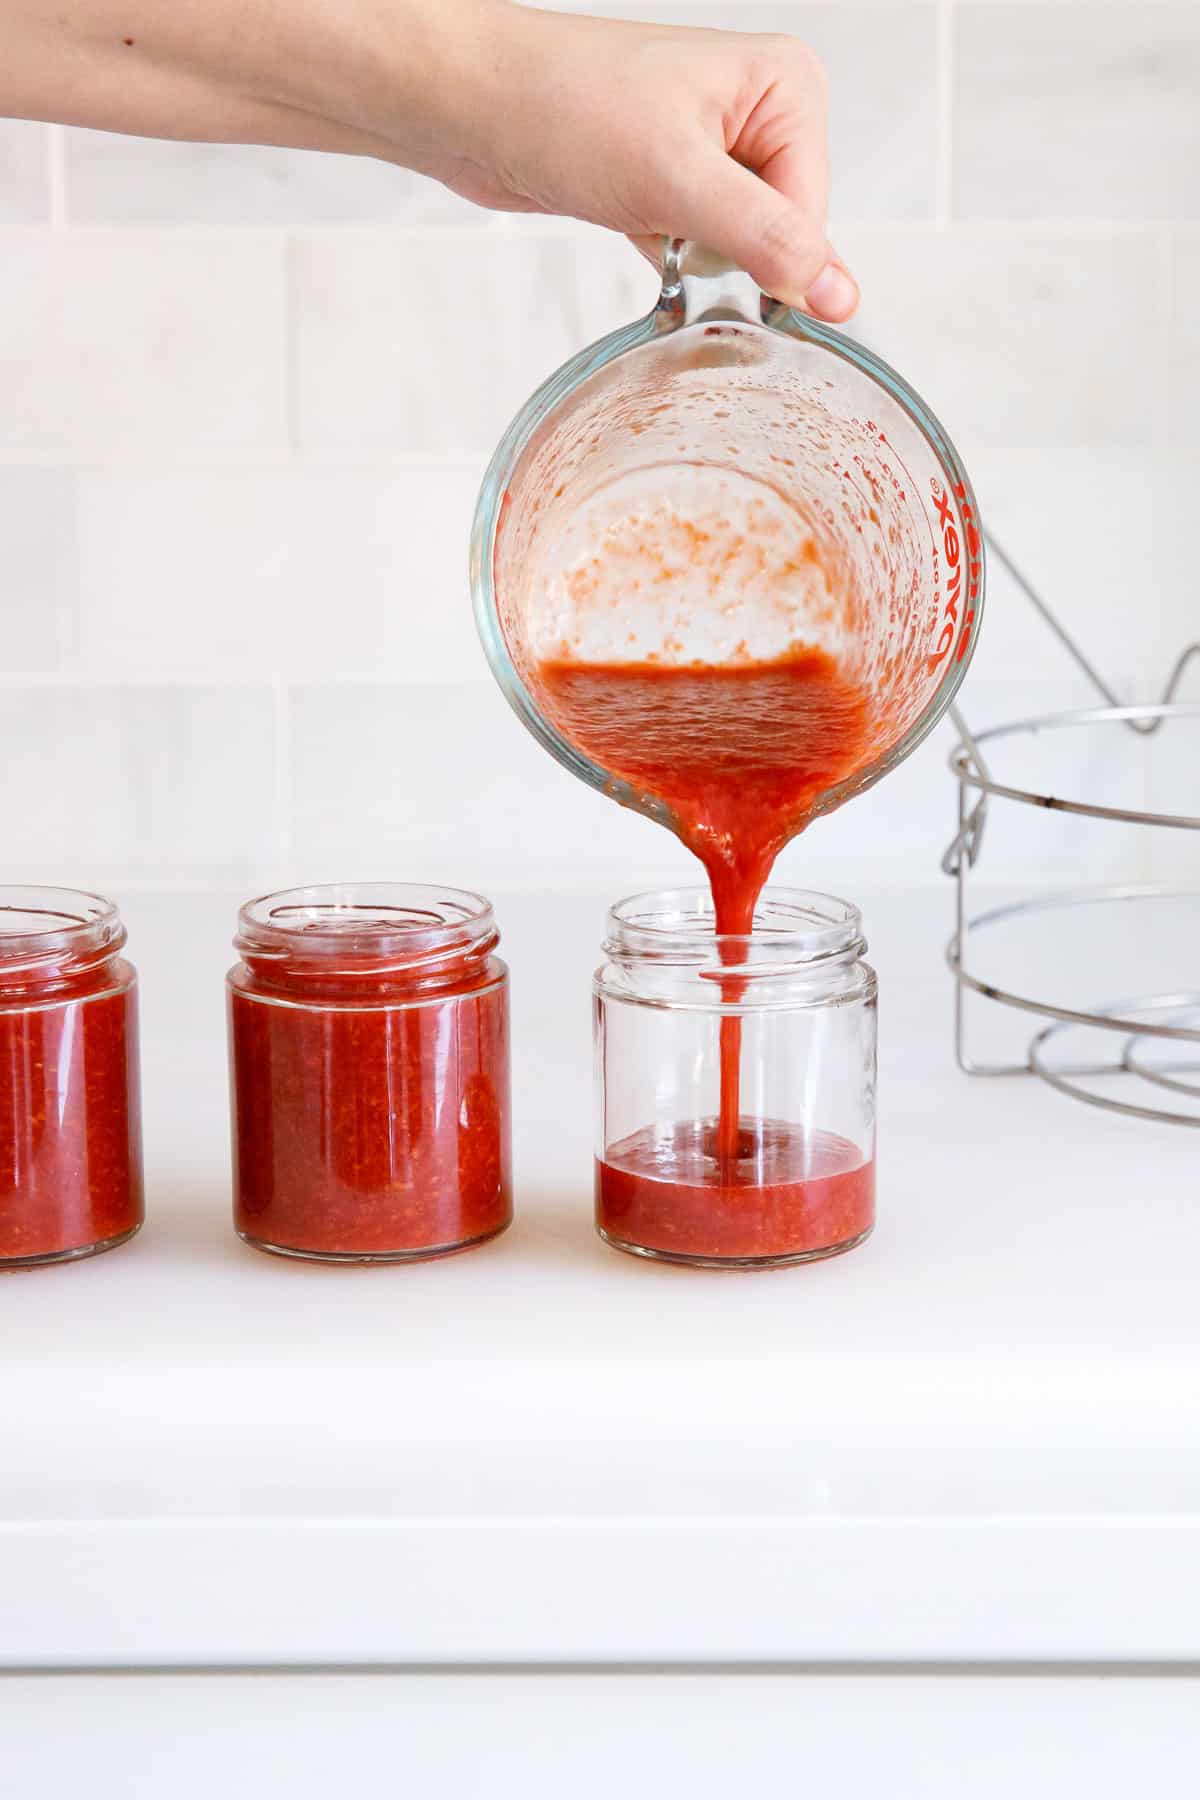 Dividing finished jam among glass jam jars.